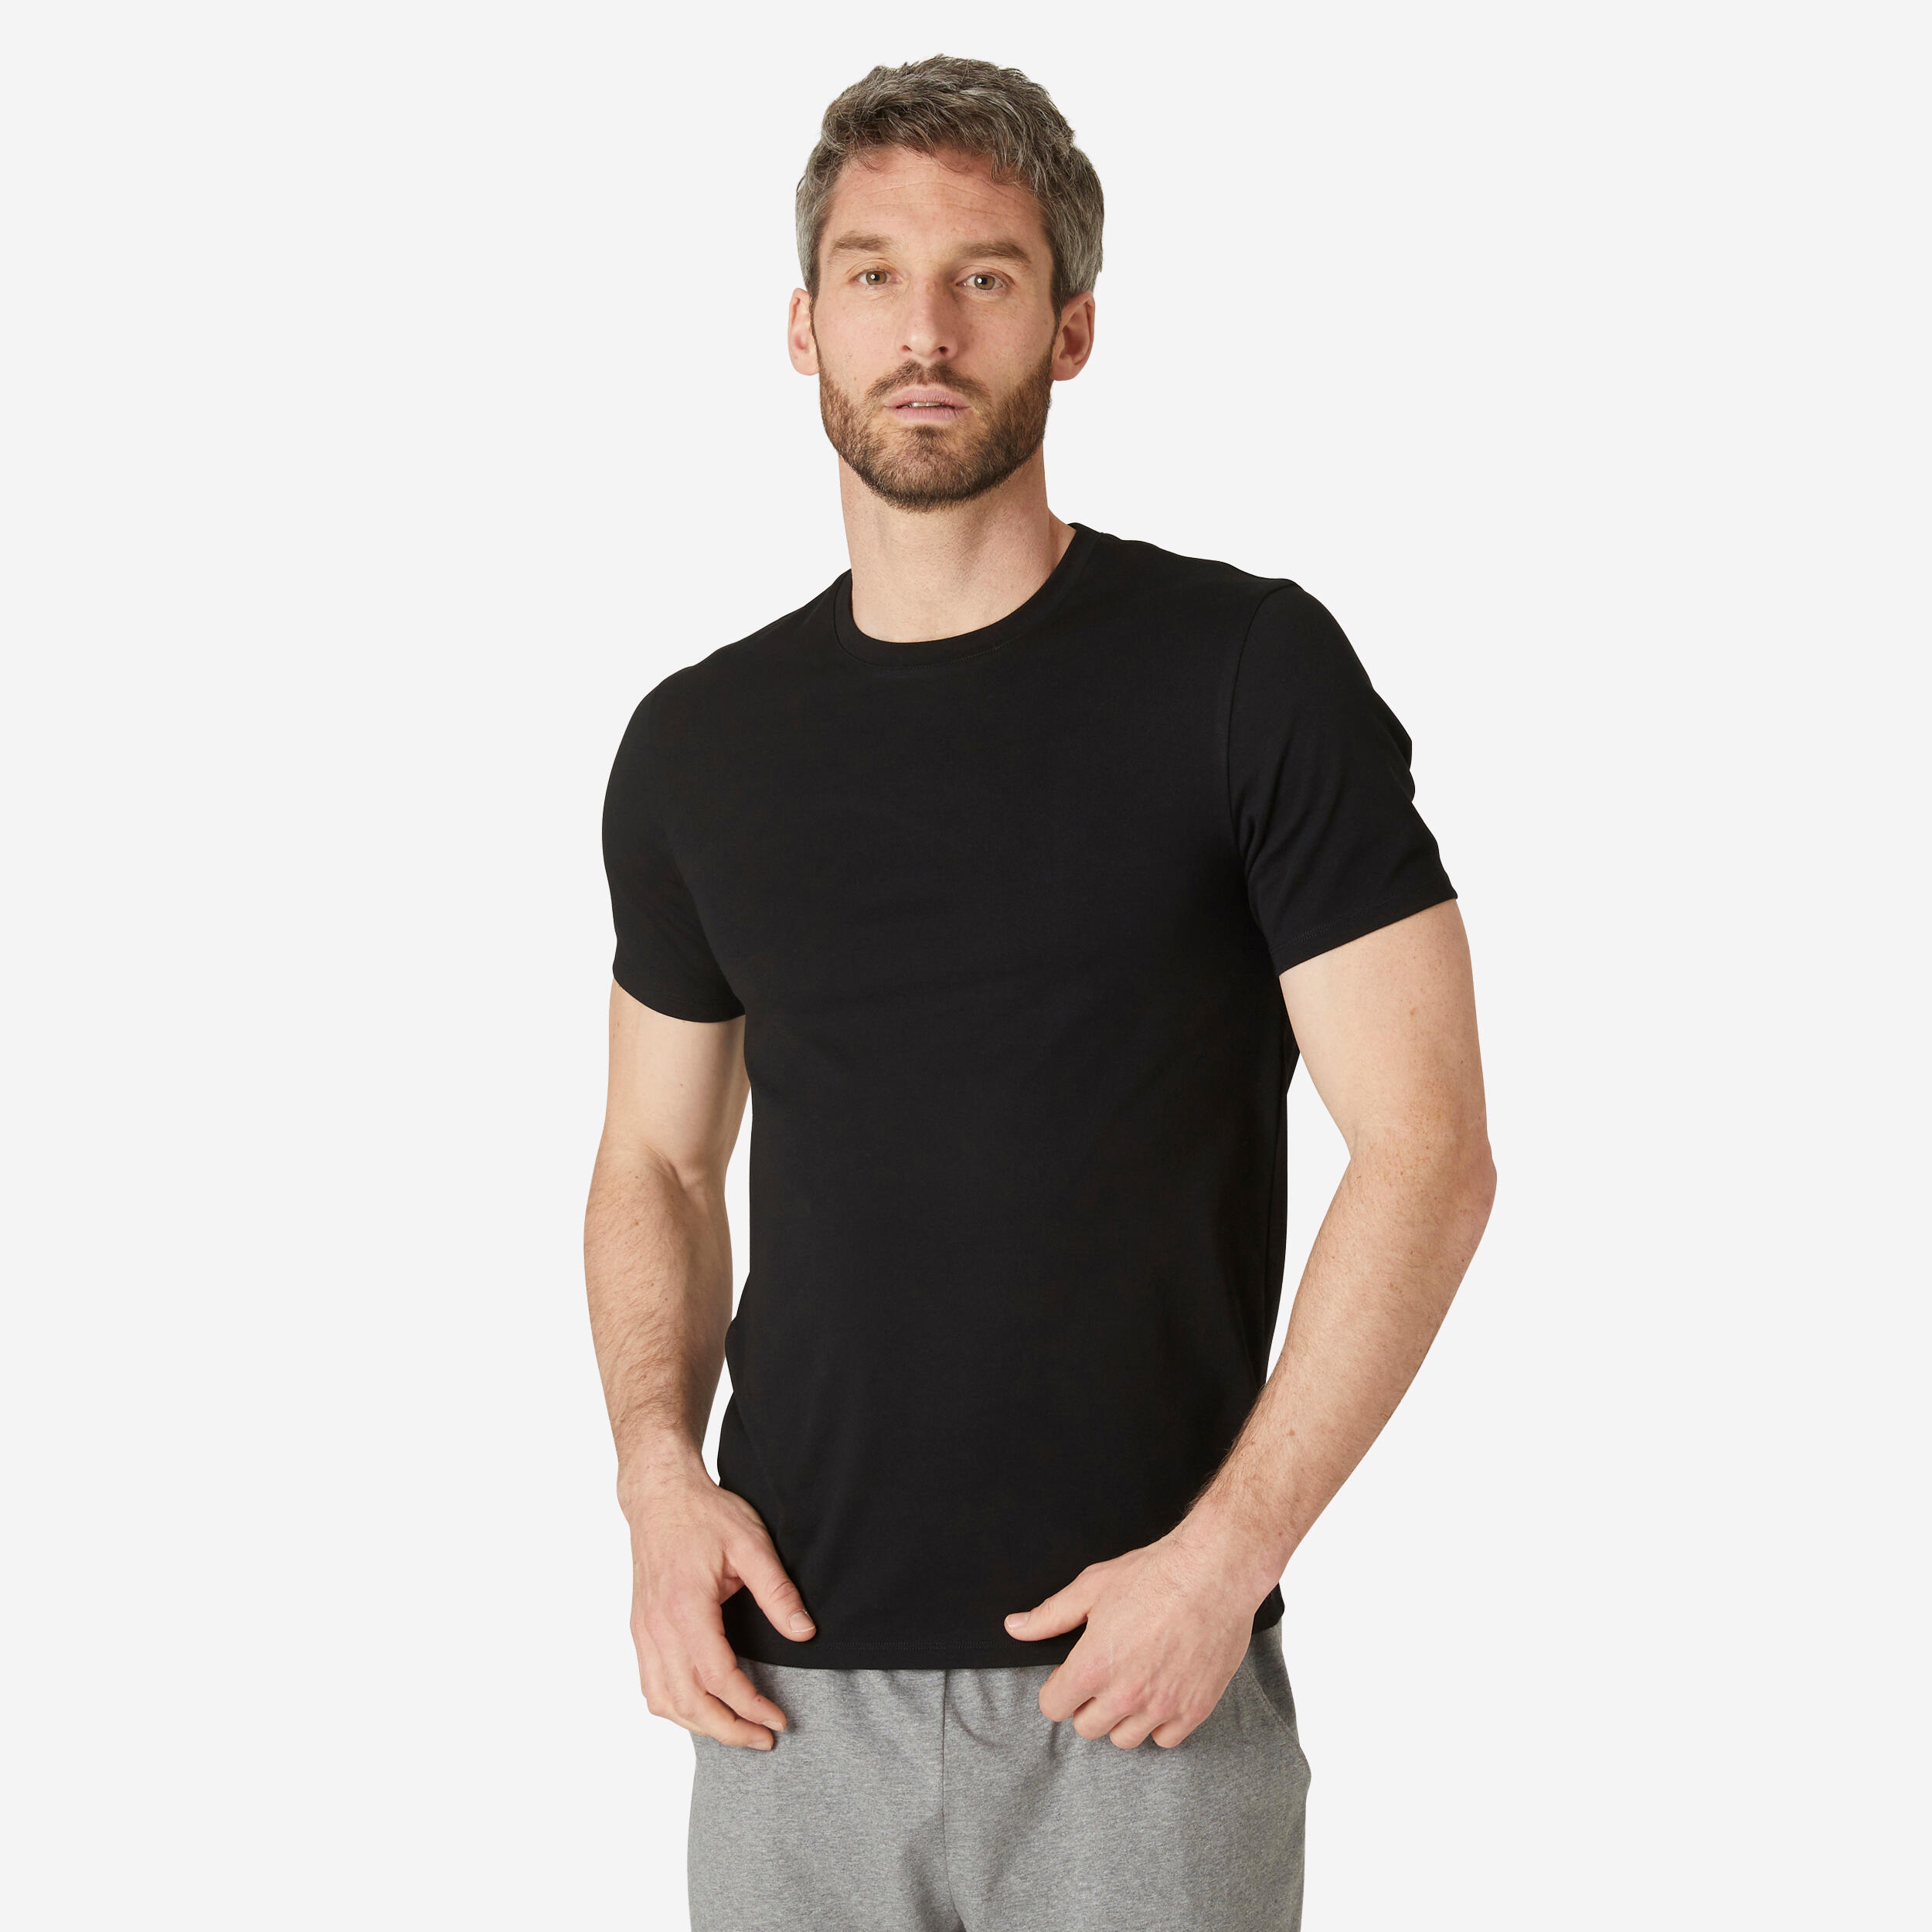 Men's Slim-Fit Fitness T-Shirt 500 - Black 1/19